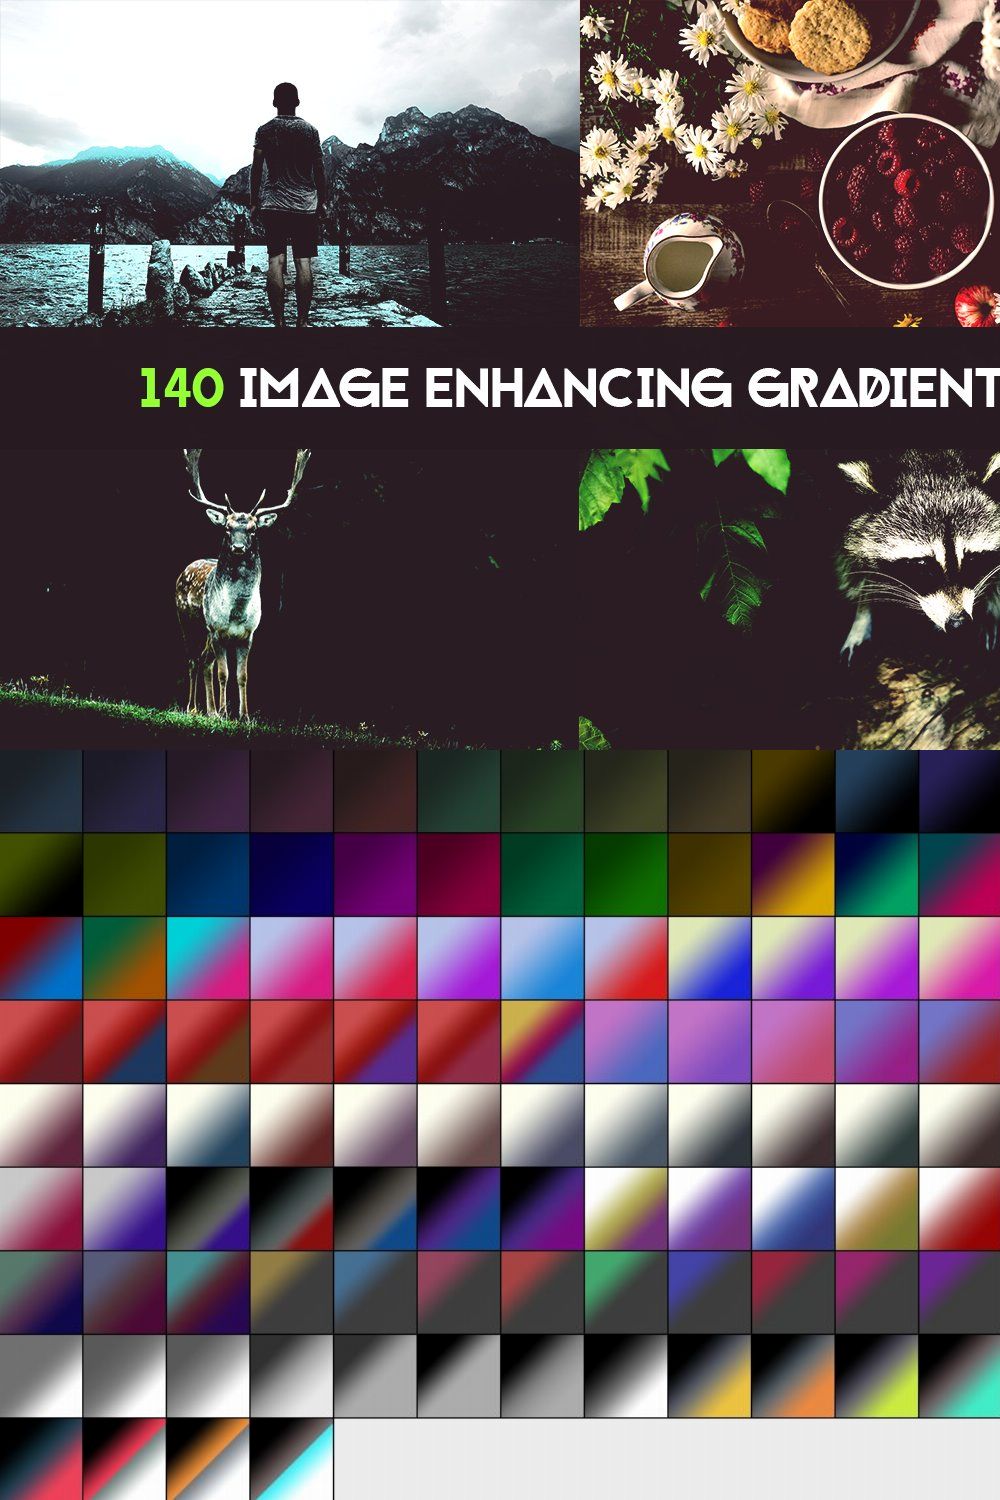 140 Image enhancing gradients pinterest preview image.